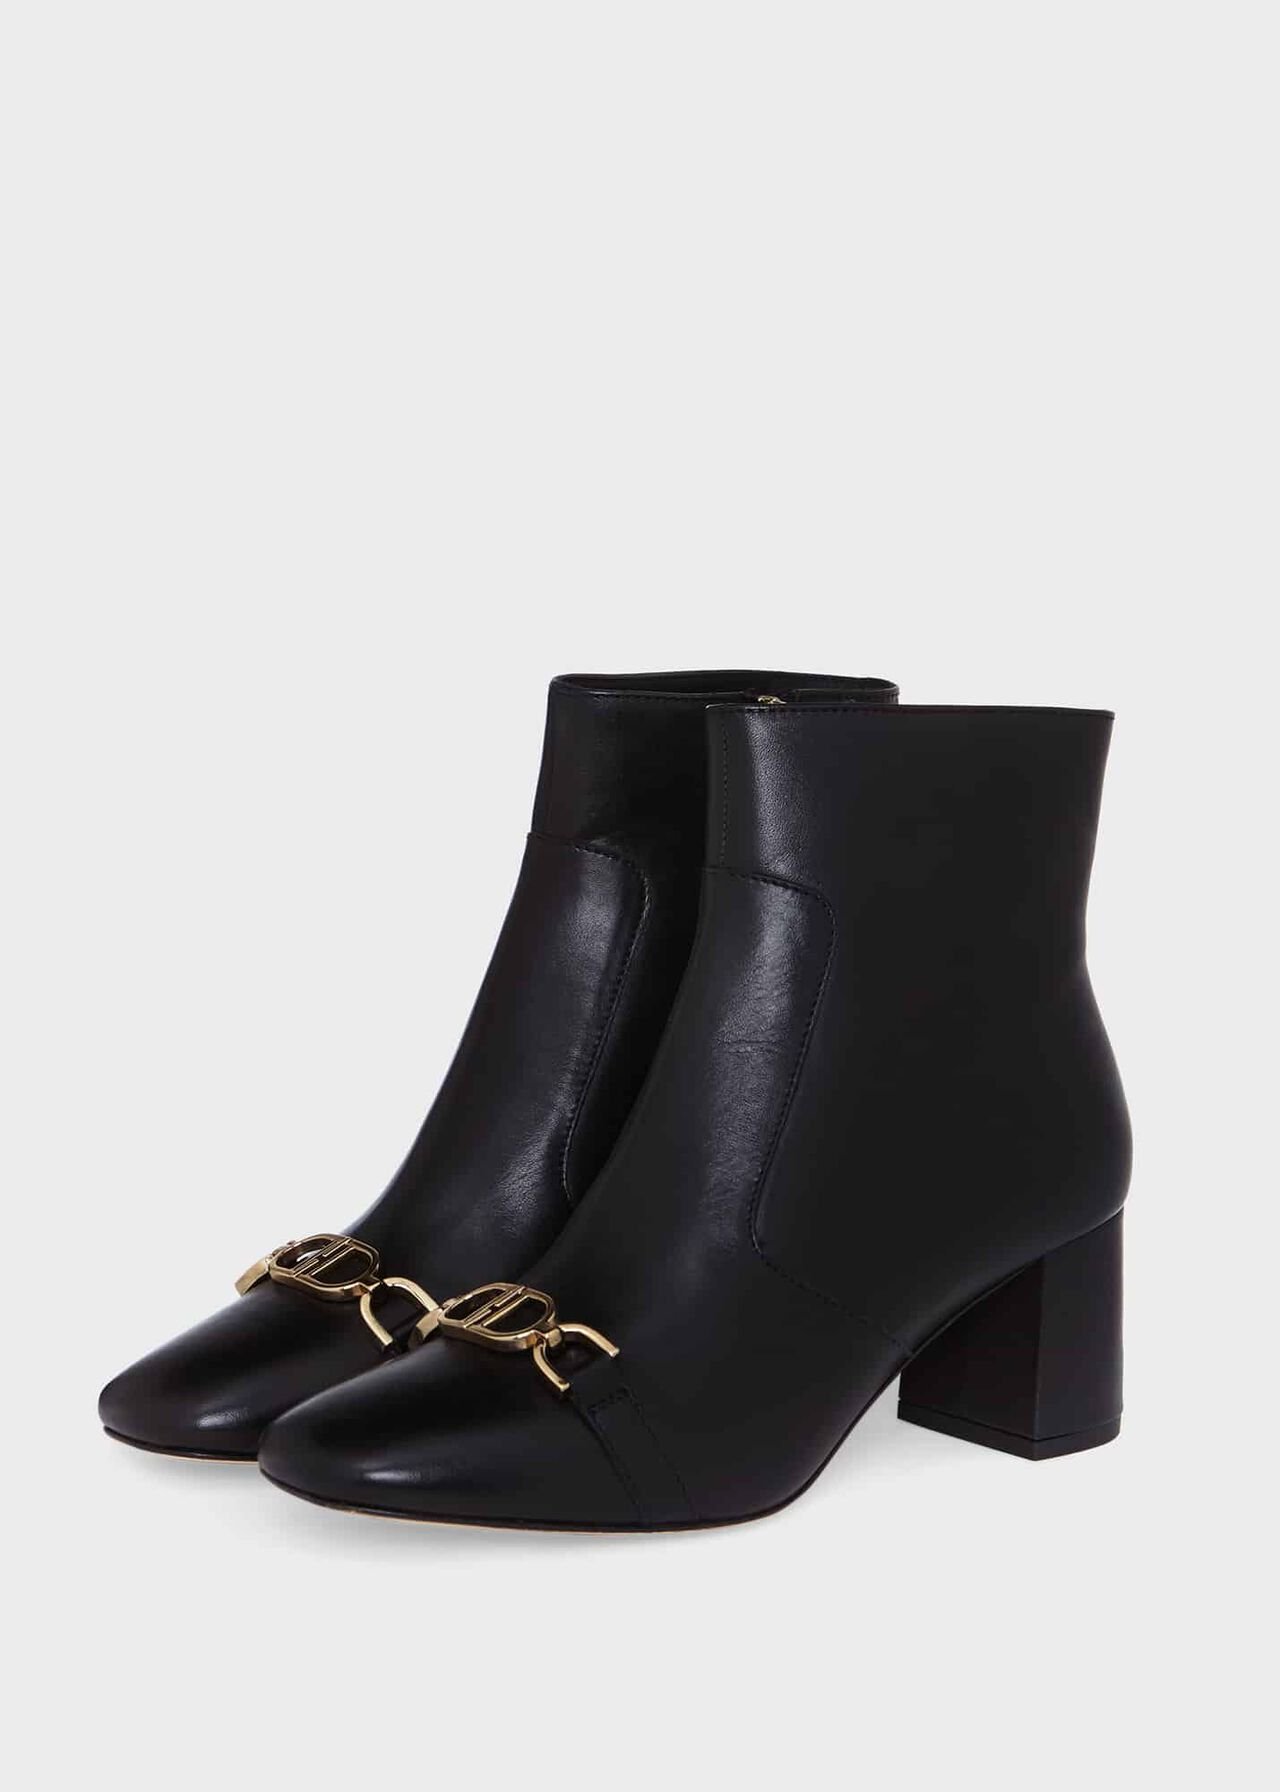 Rosella Trim Ankle Boots, Black, hi-res